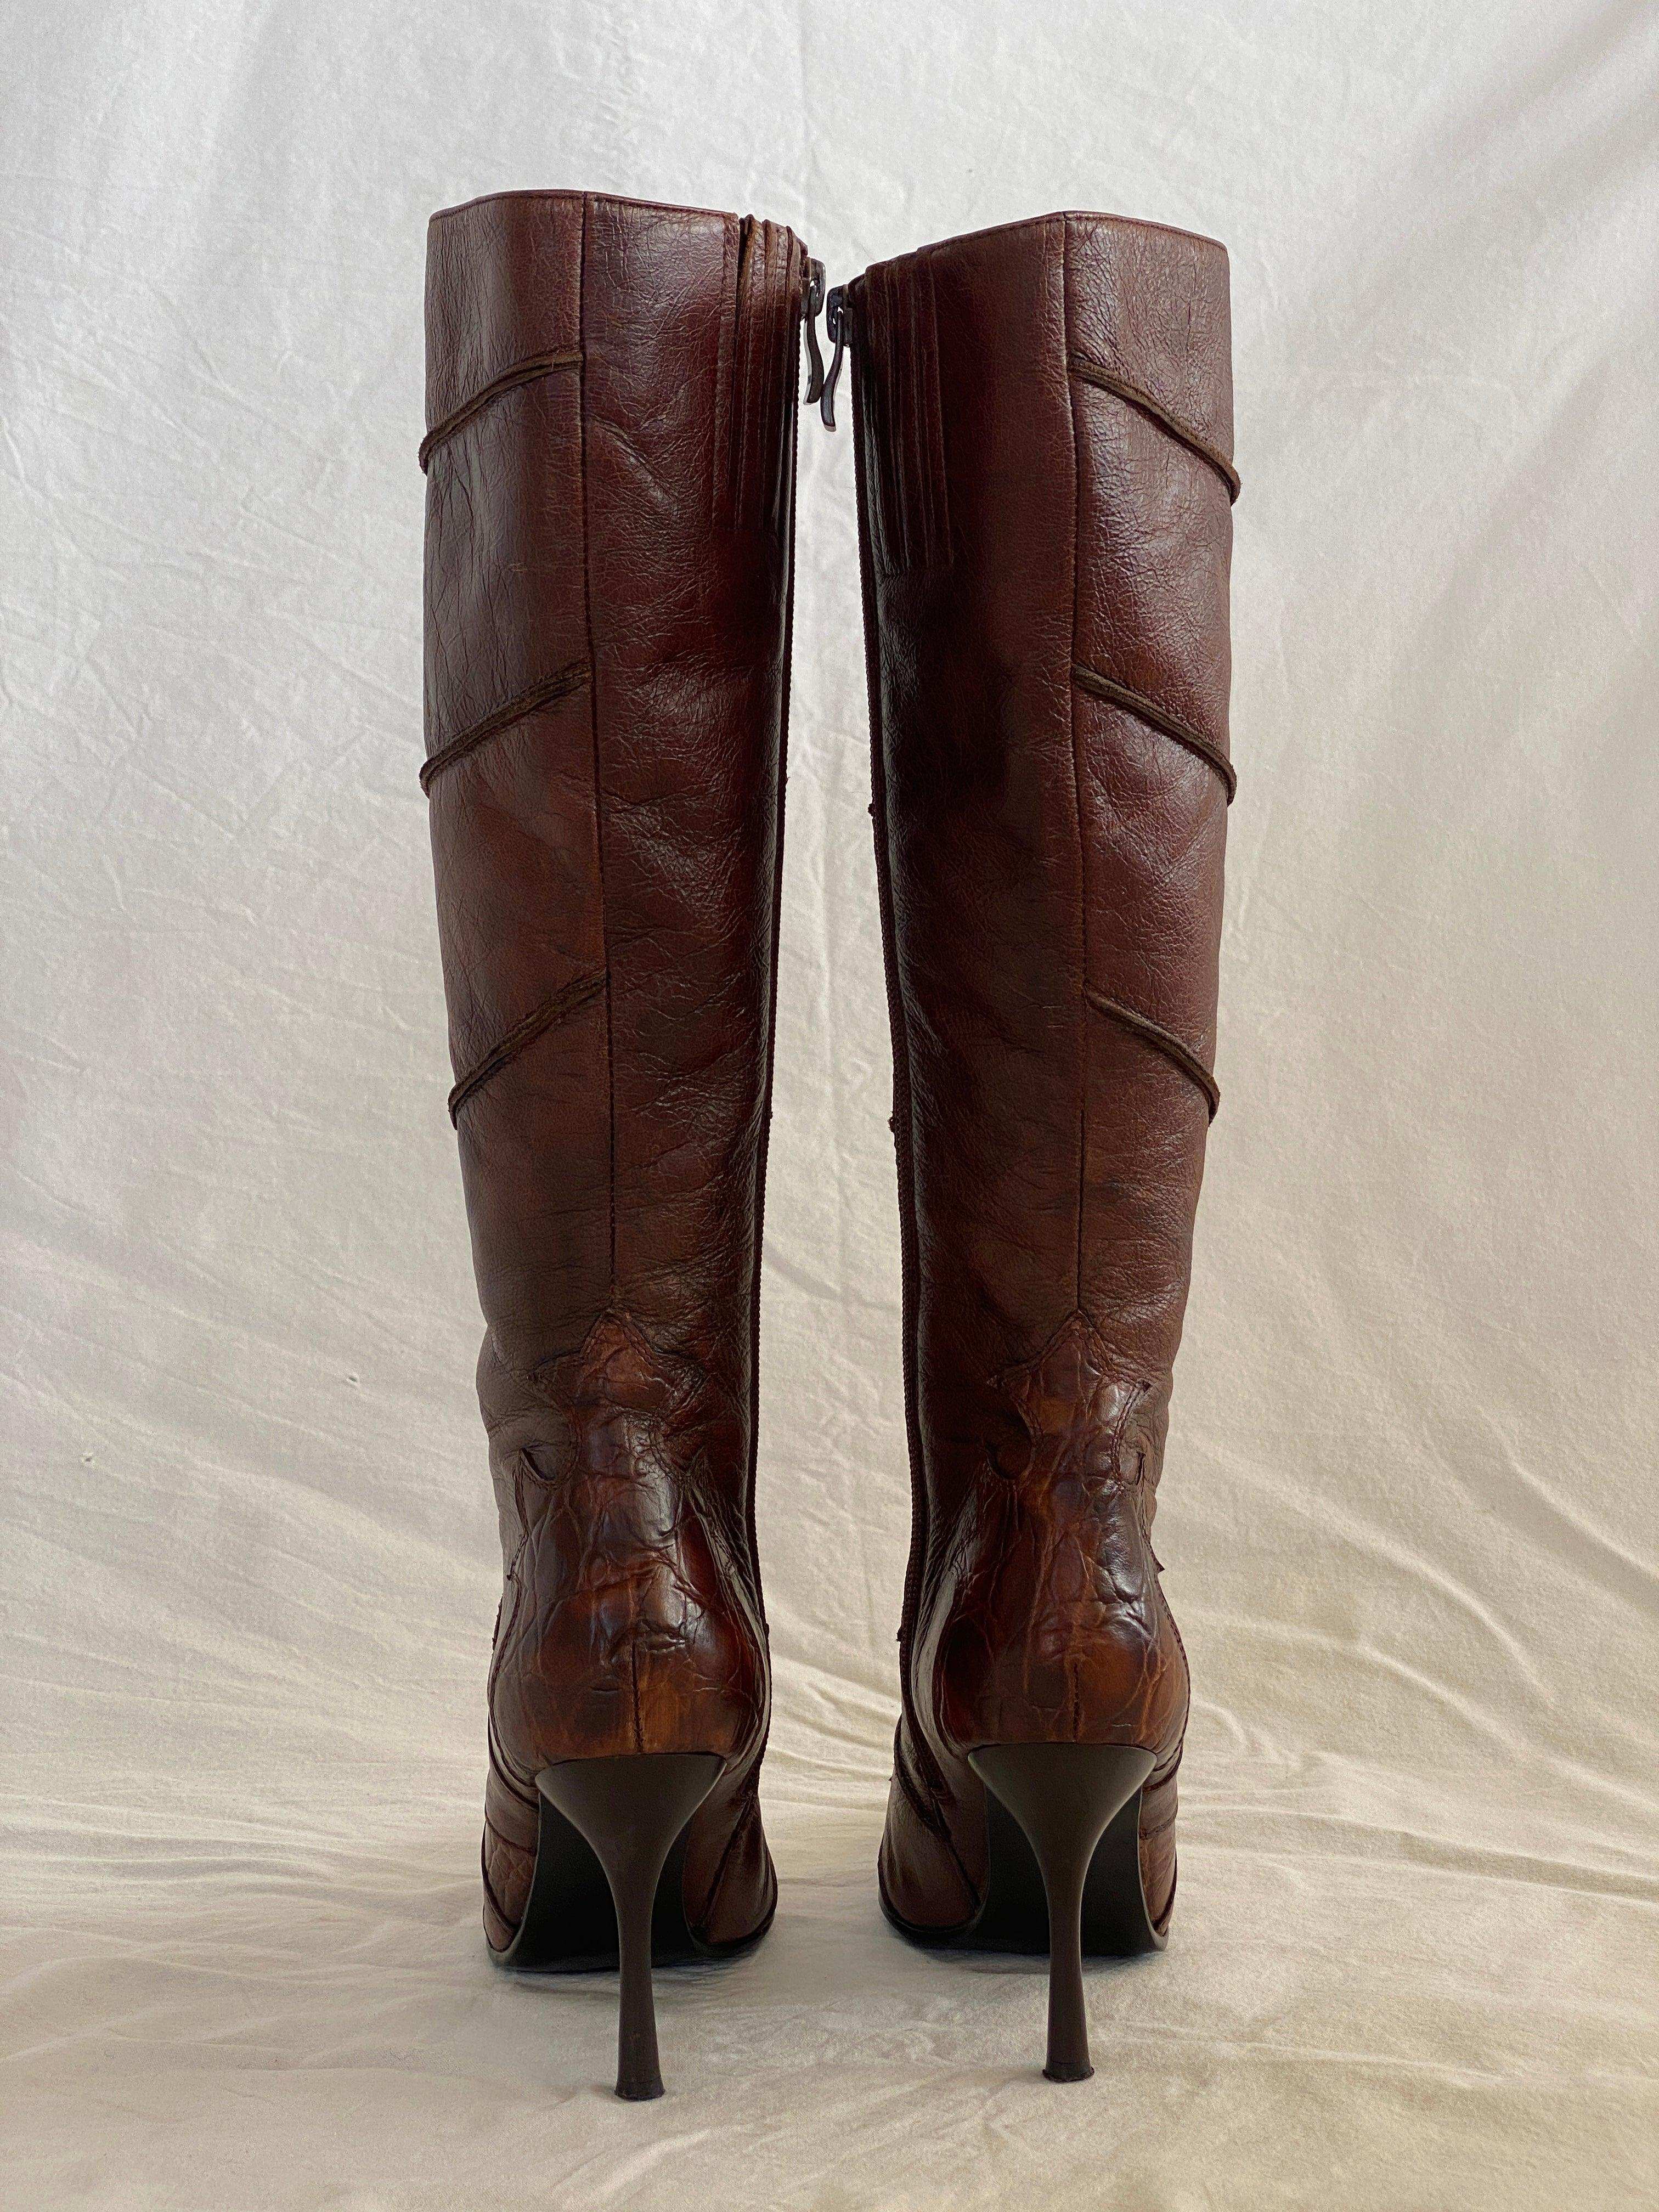 Vintage Dorse-Gabana by Julia Monti Western Cowboy High-Heeled Boots - Balagan Vintage Cowboy boots Boots, brown leather, cowboy, cowboy boots, genuine leather, NEW IN